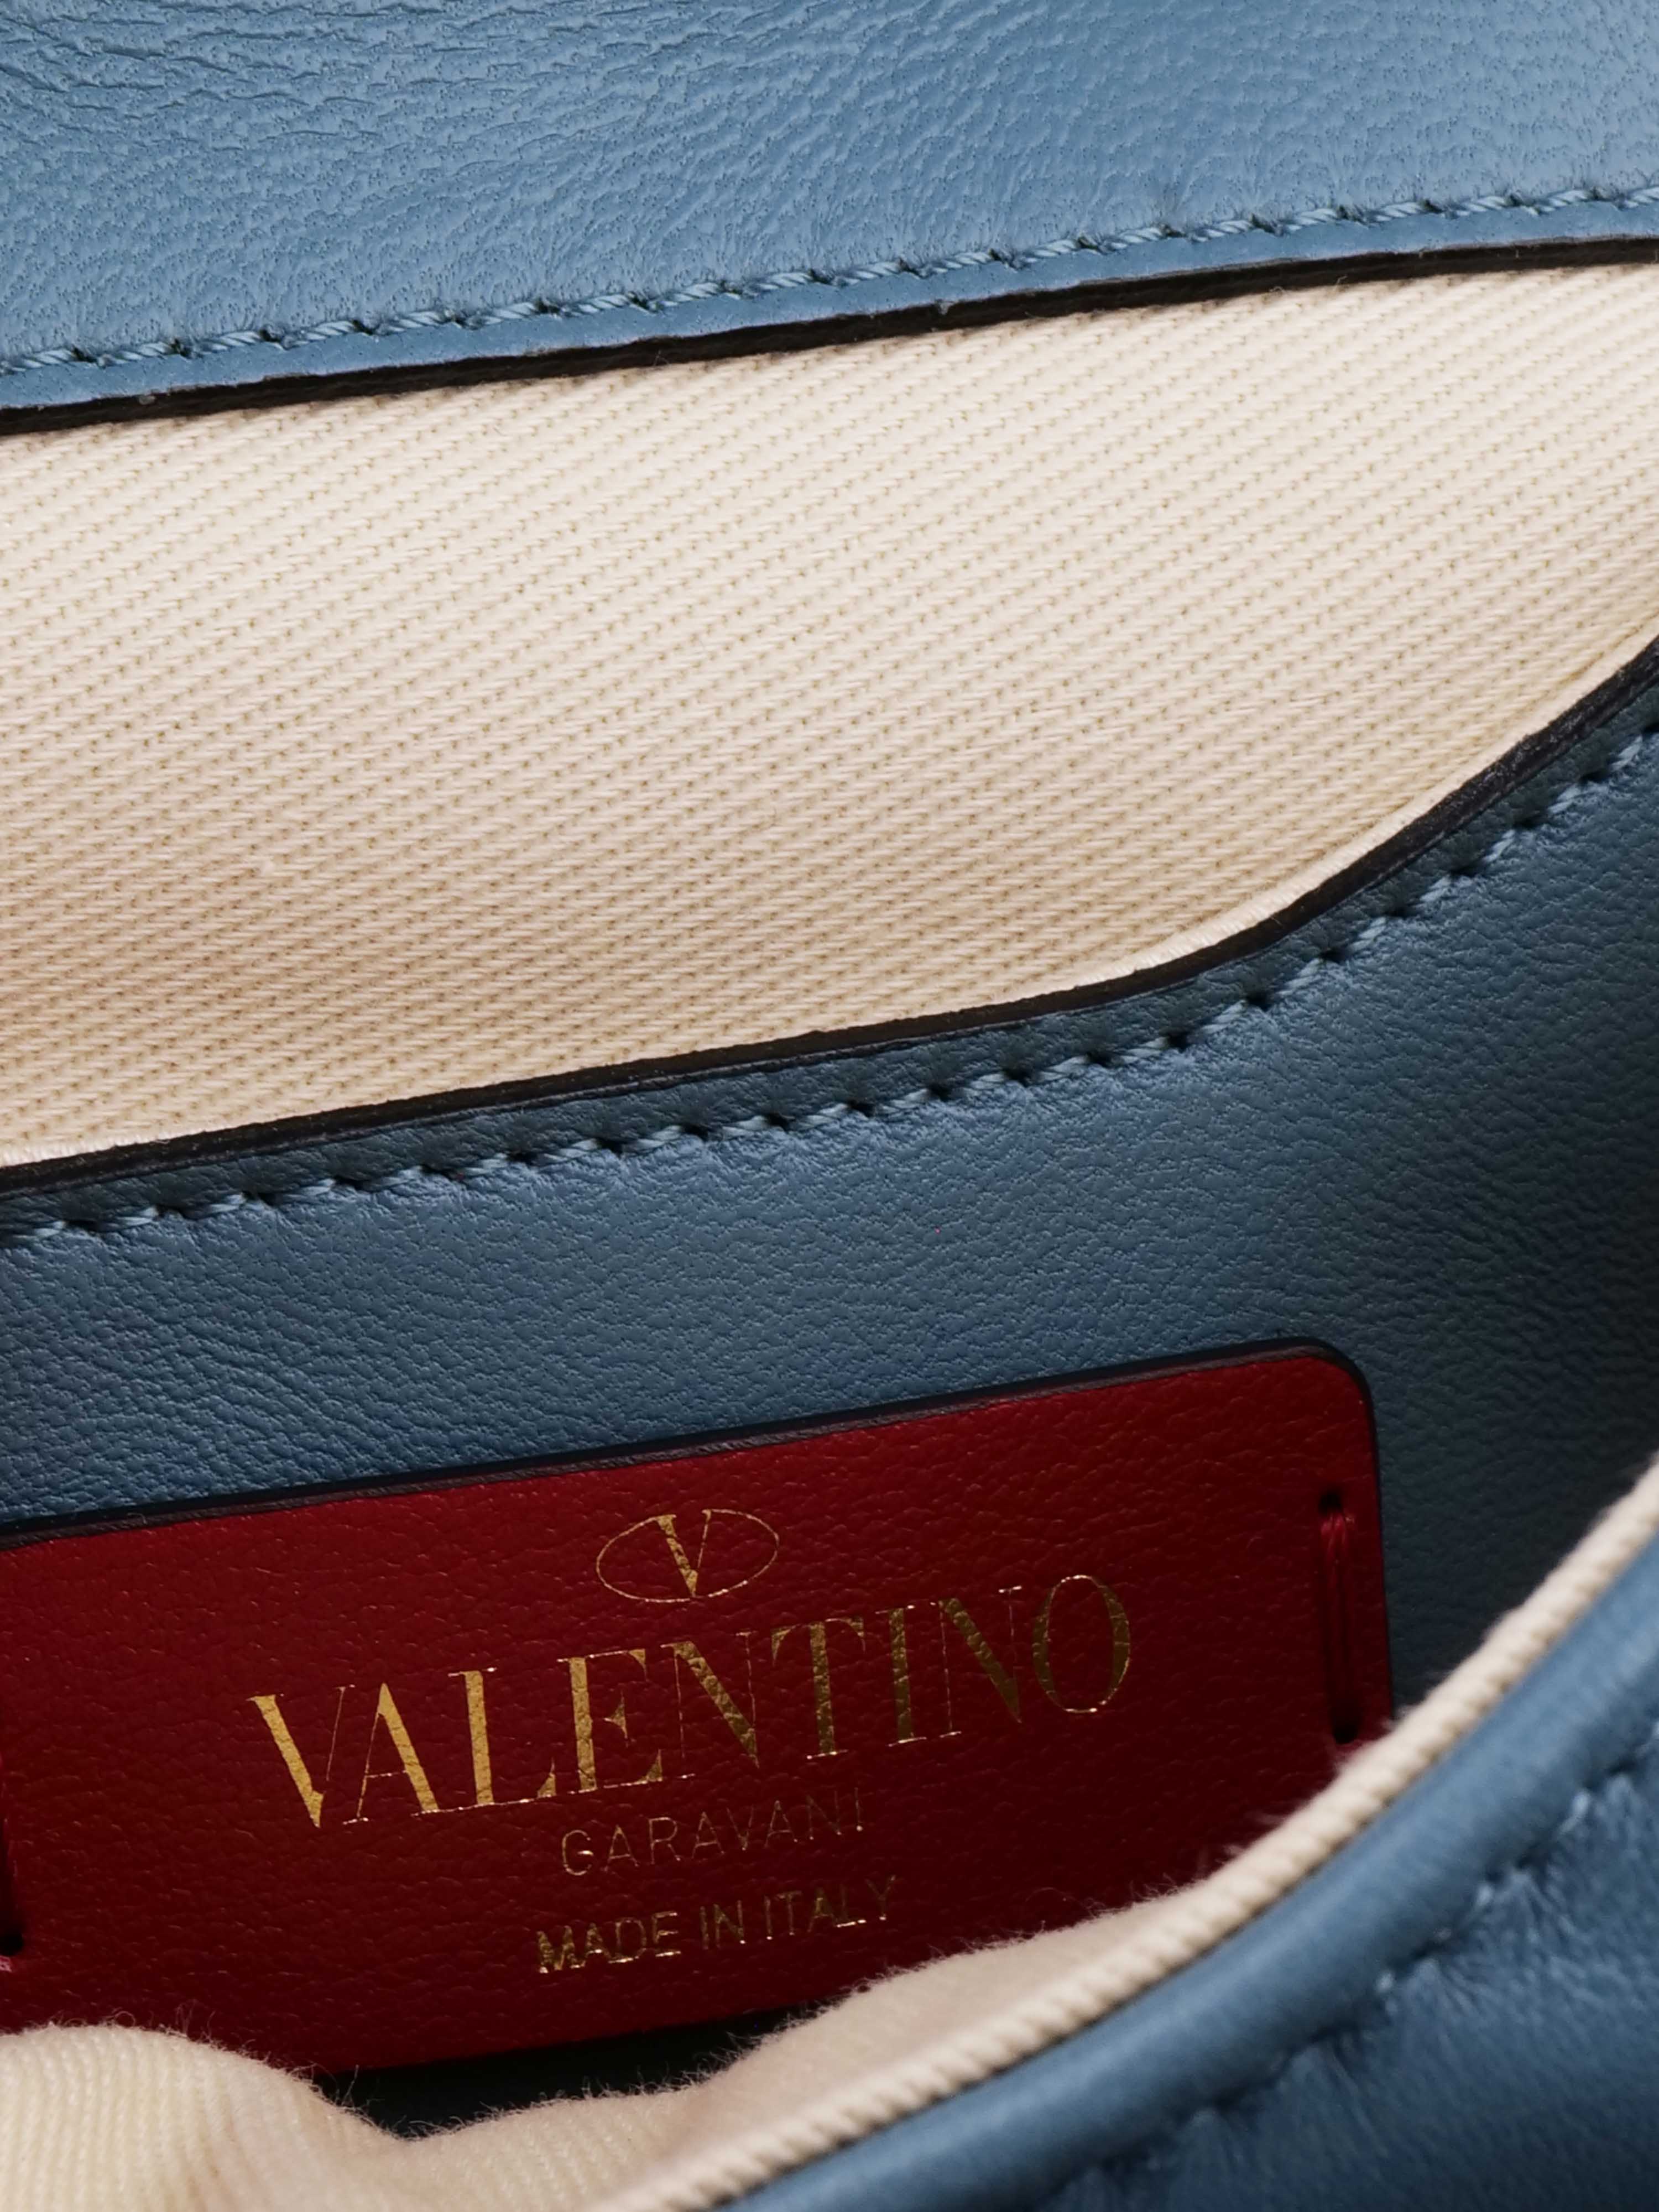 Valentino Mini Candy Stud Shoulder Bag.